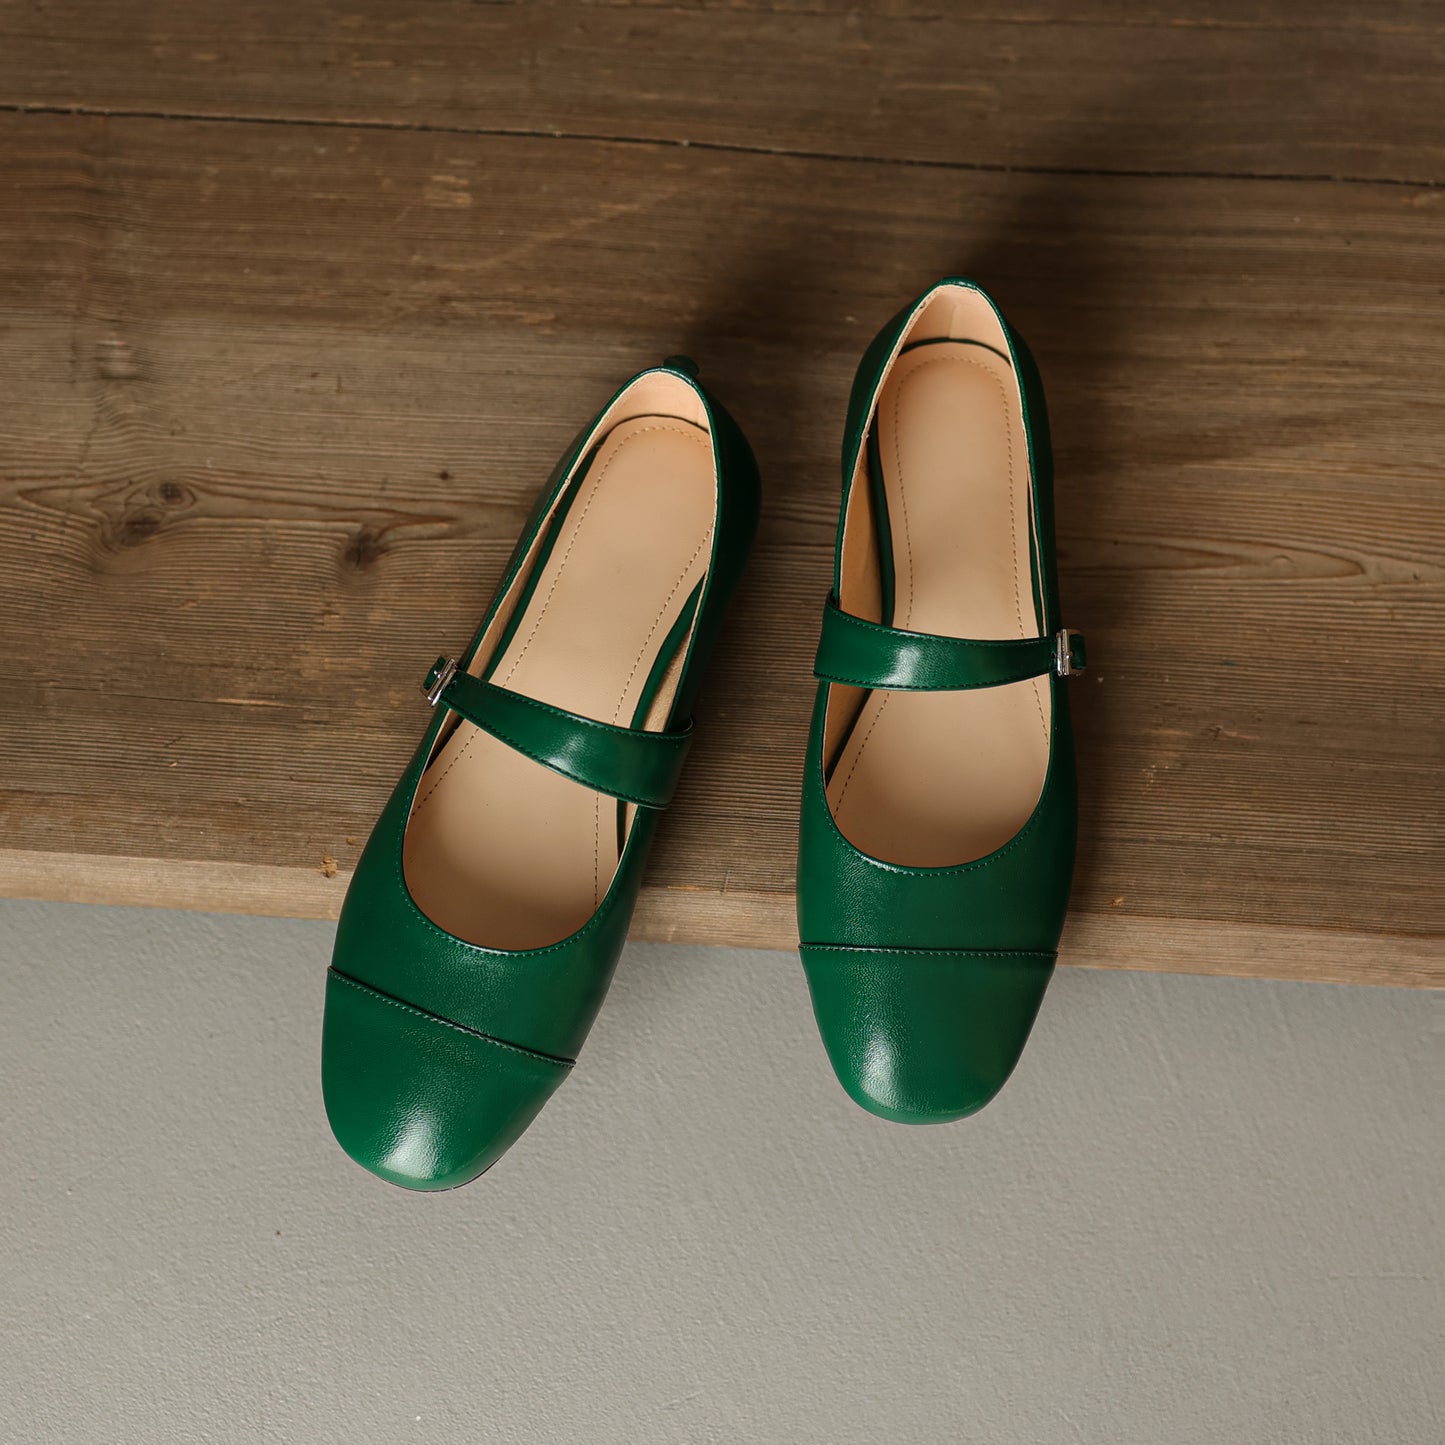 TinaCus Handmade Genuine Leather Women's Round Toe Flat Modern Buckle Mary Jane Shoes